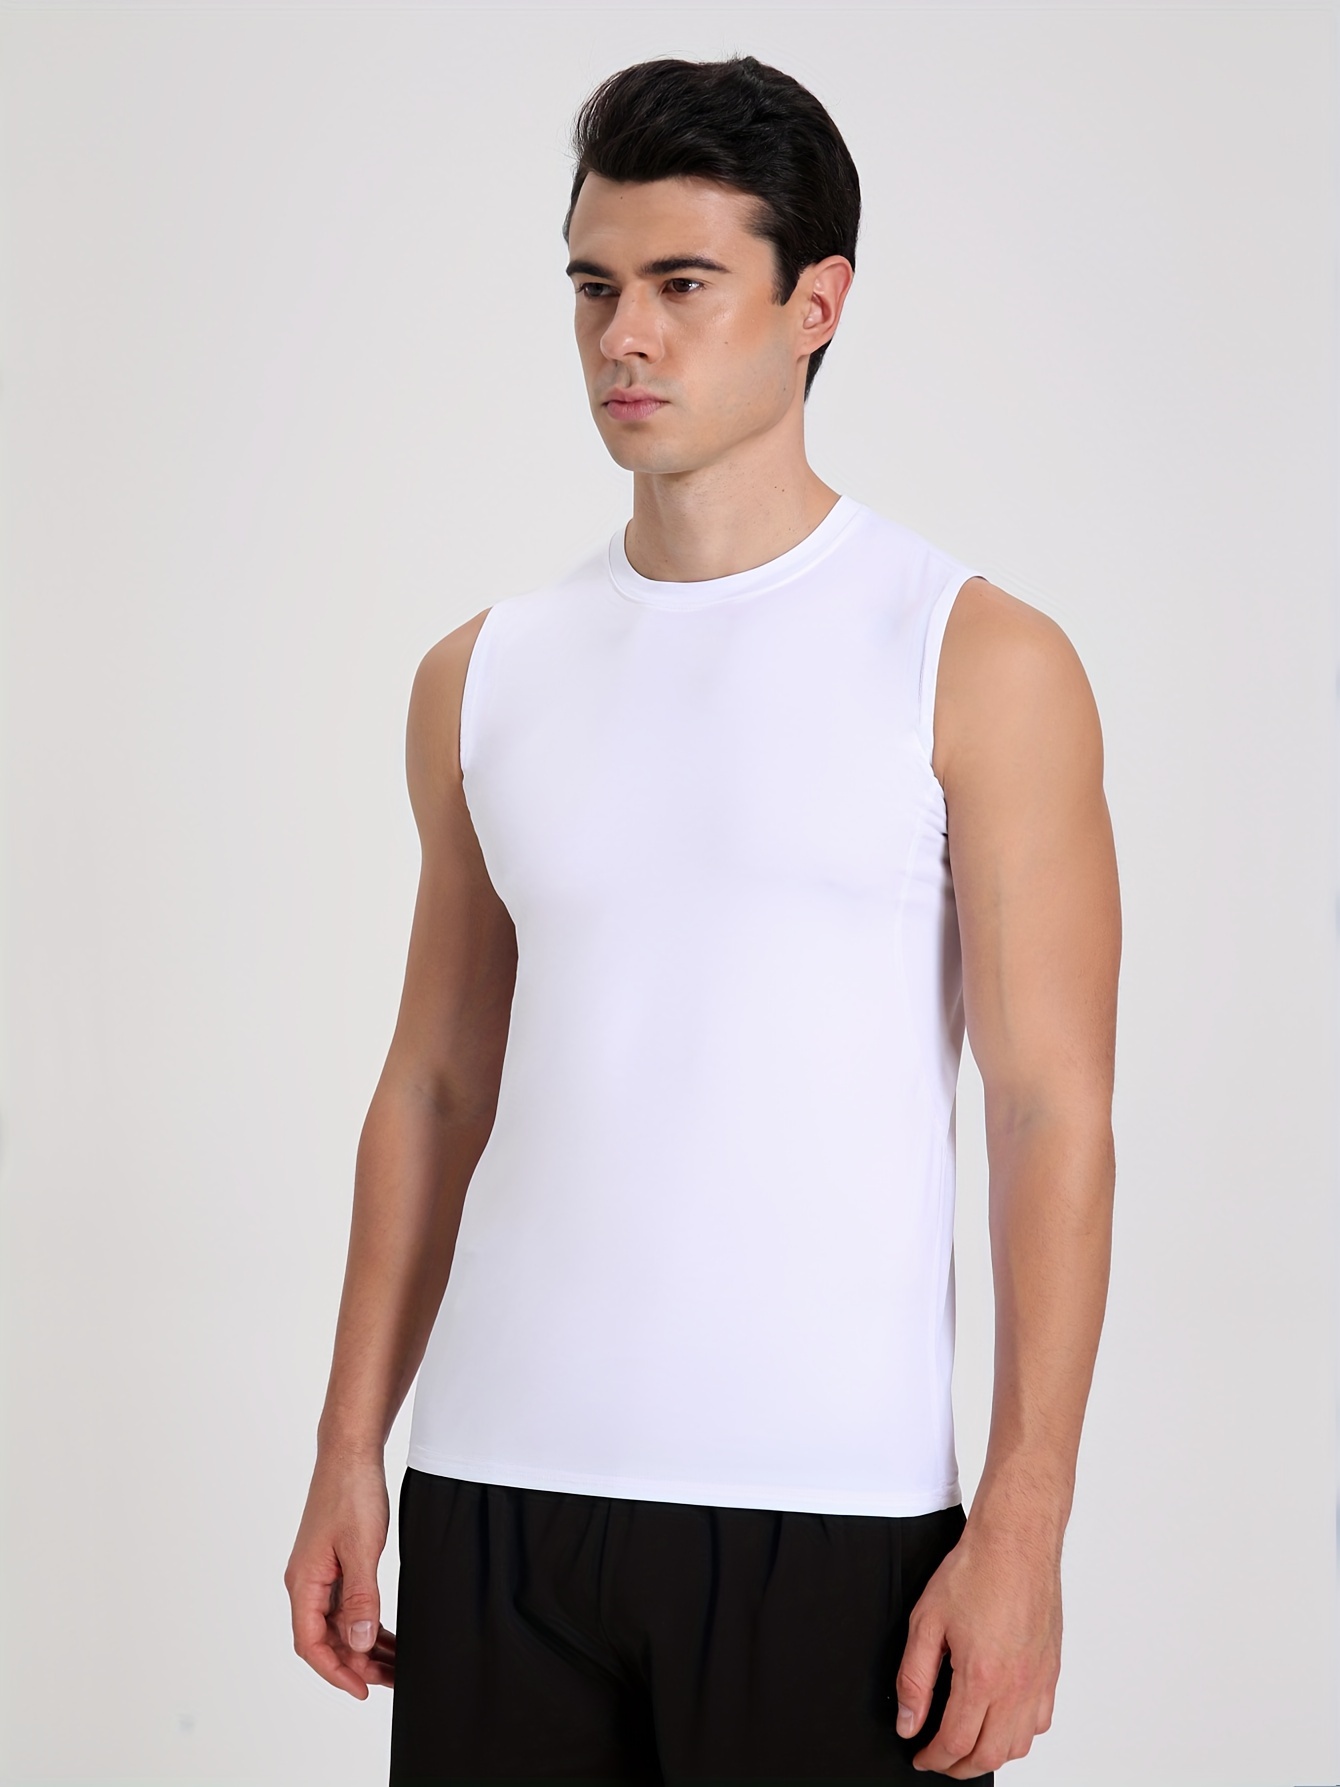 Camiseta sin mangas de compresión para hombre Camiseta de verano Capa base  Gimnasio Chaleco deportivo TeeBlackL